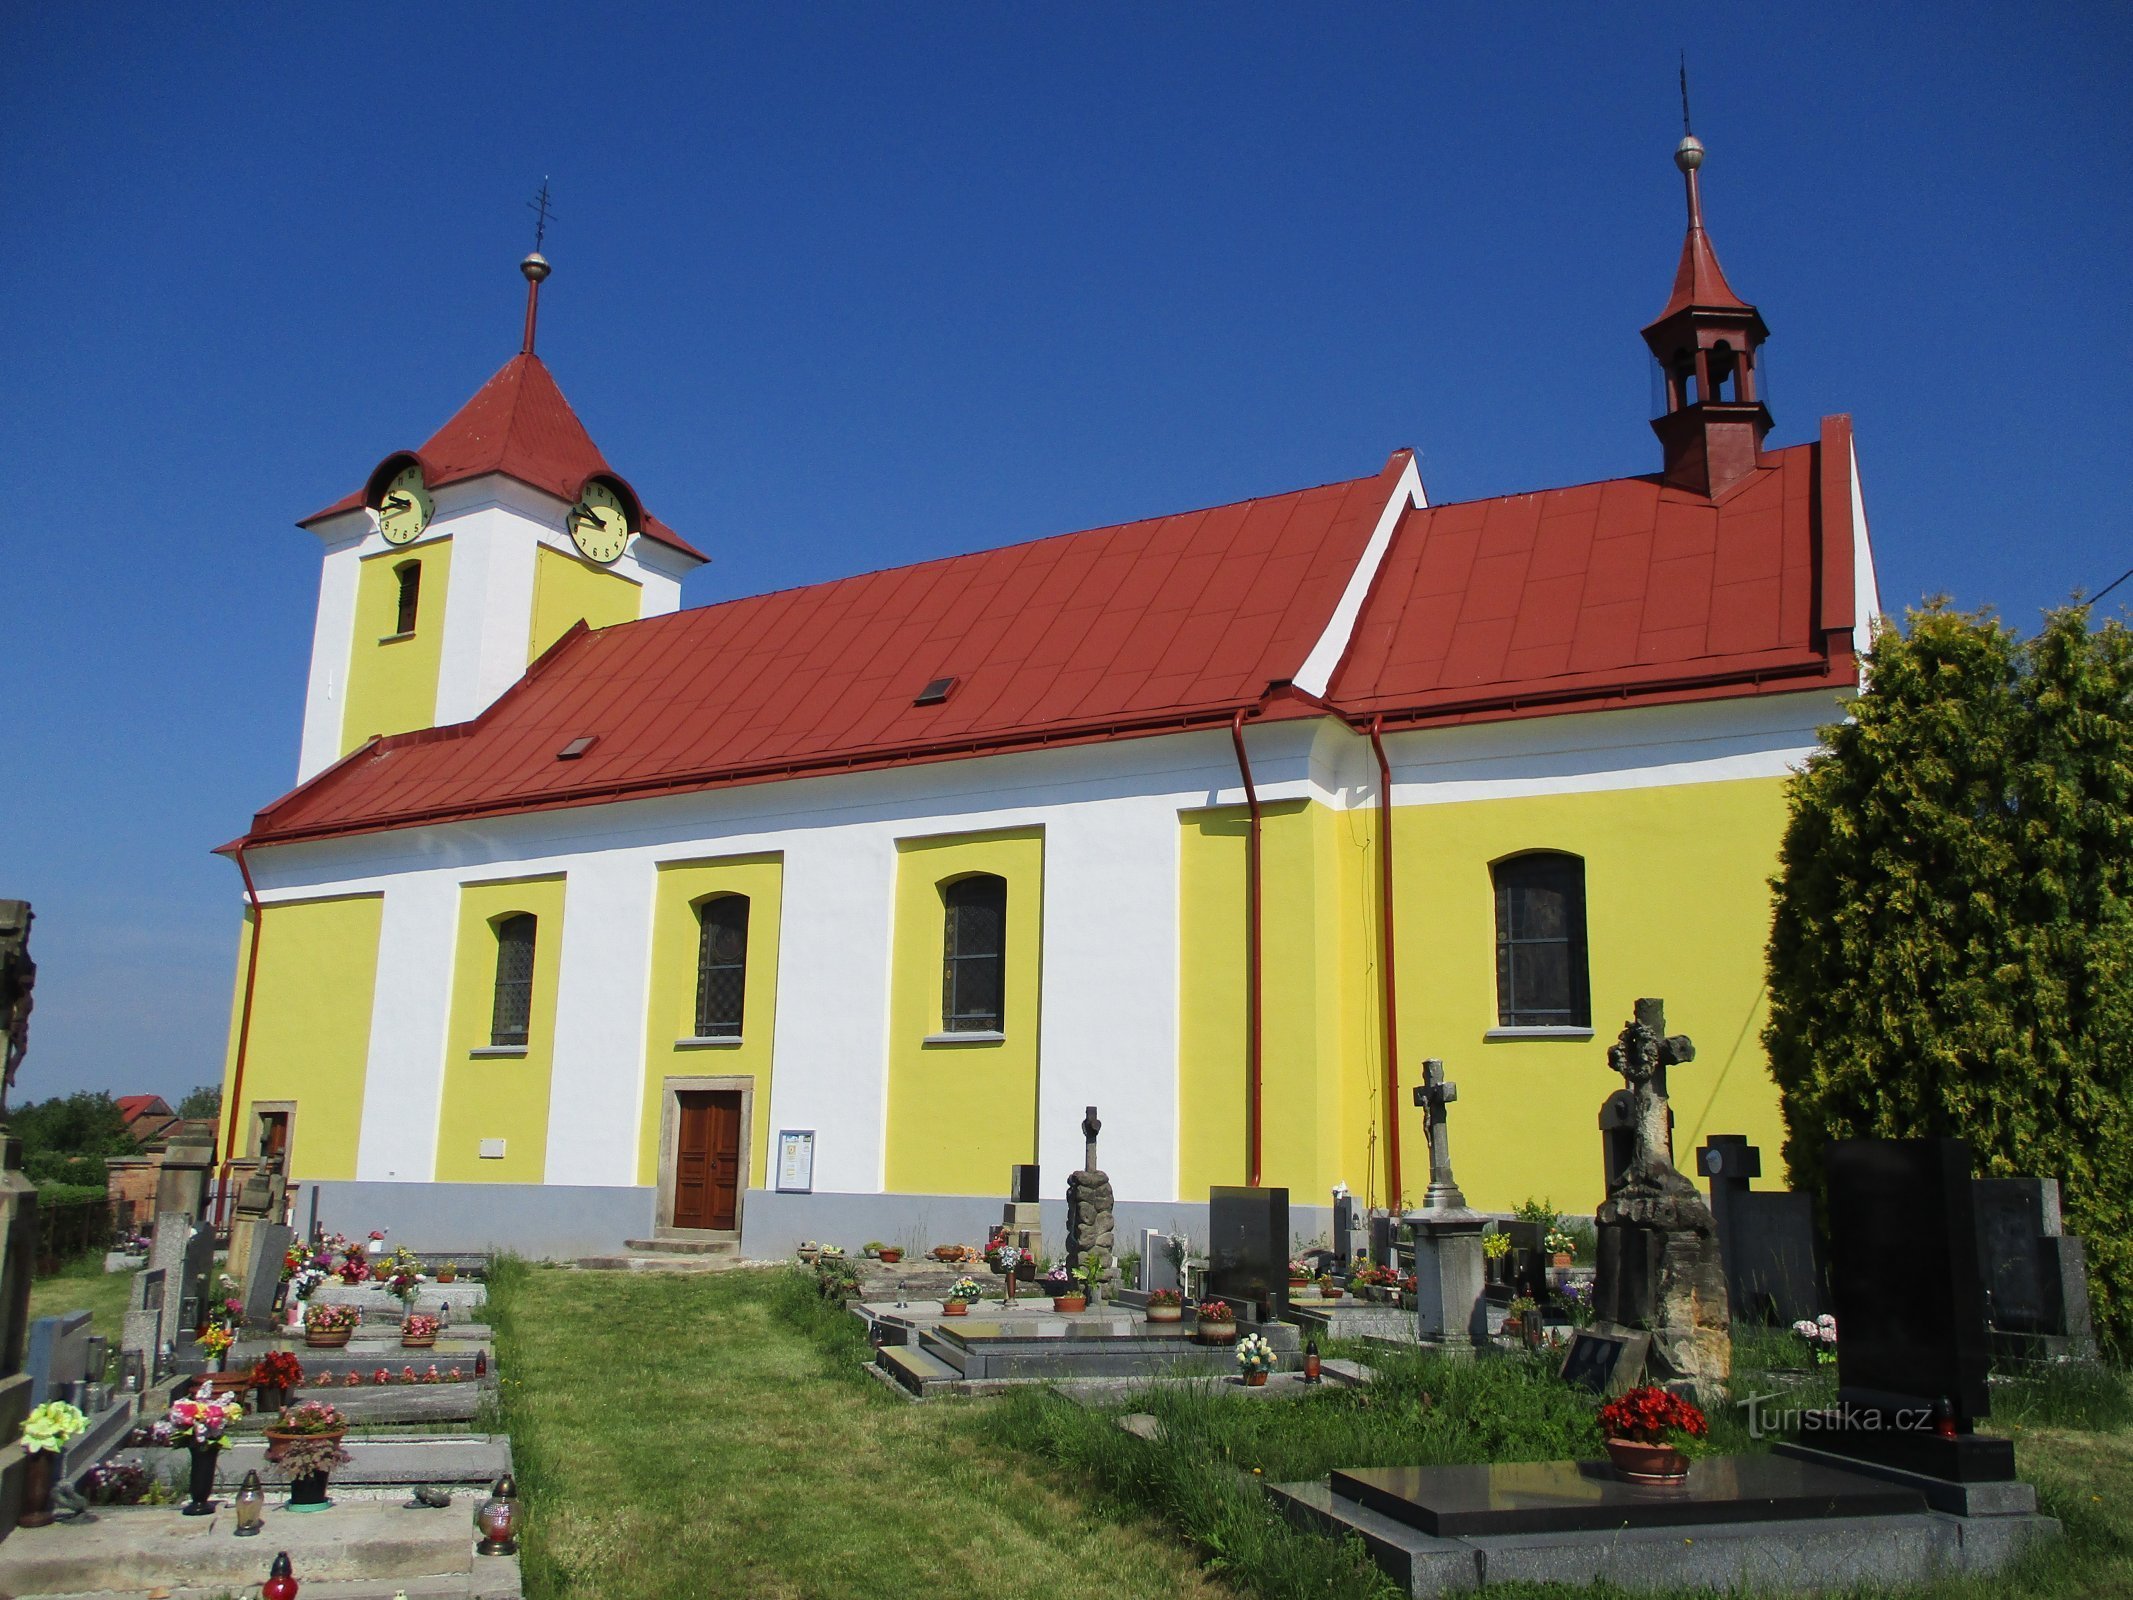 Chiesa dell'Assunzione della Vergine Maria (Velká Jesenice, 19.6.2019/XNUMX/XNUMX)